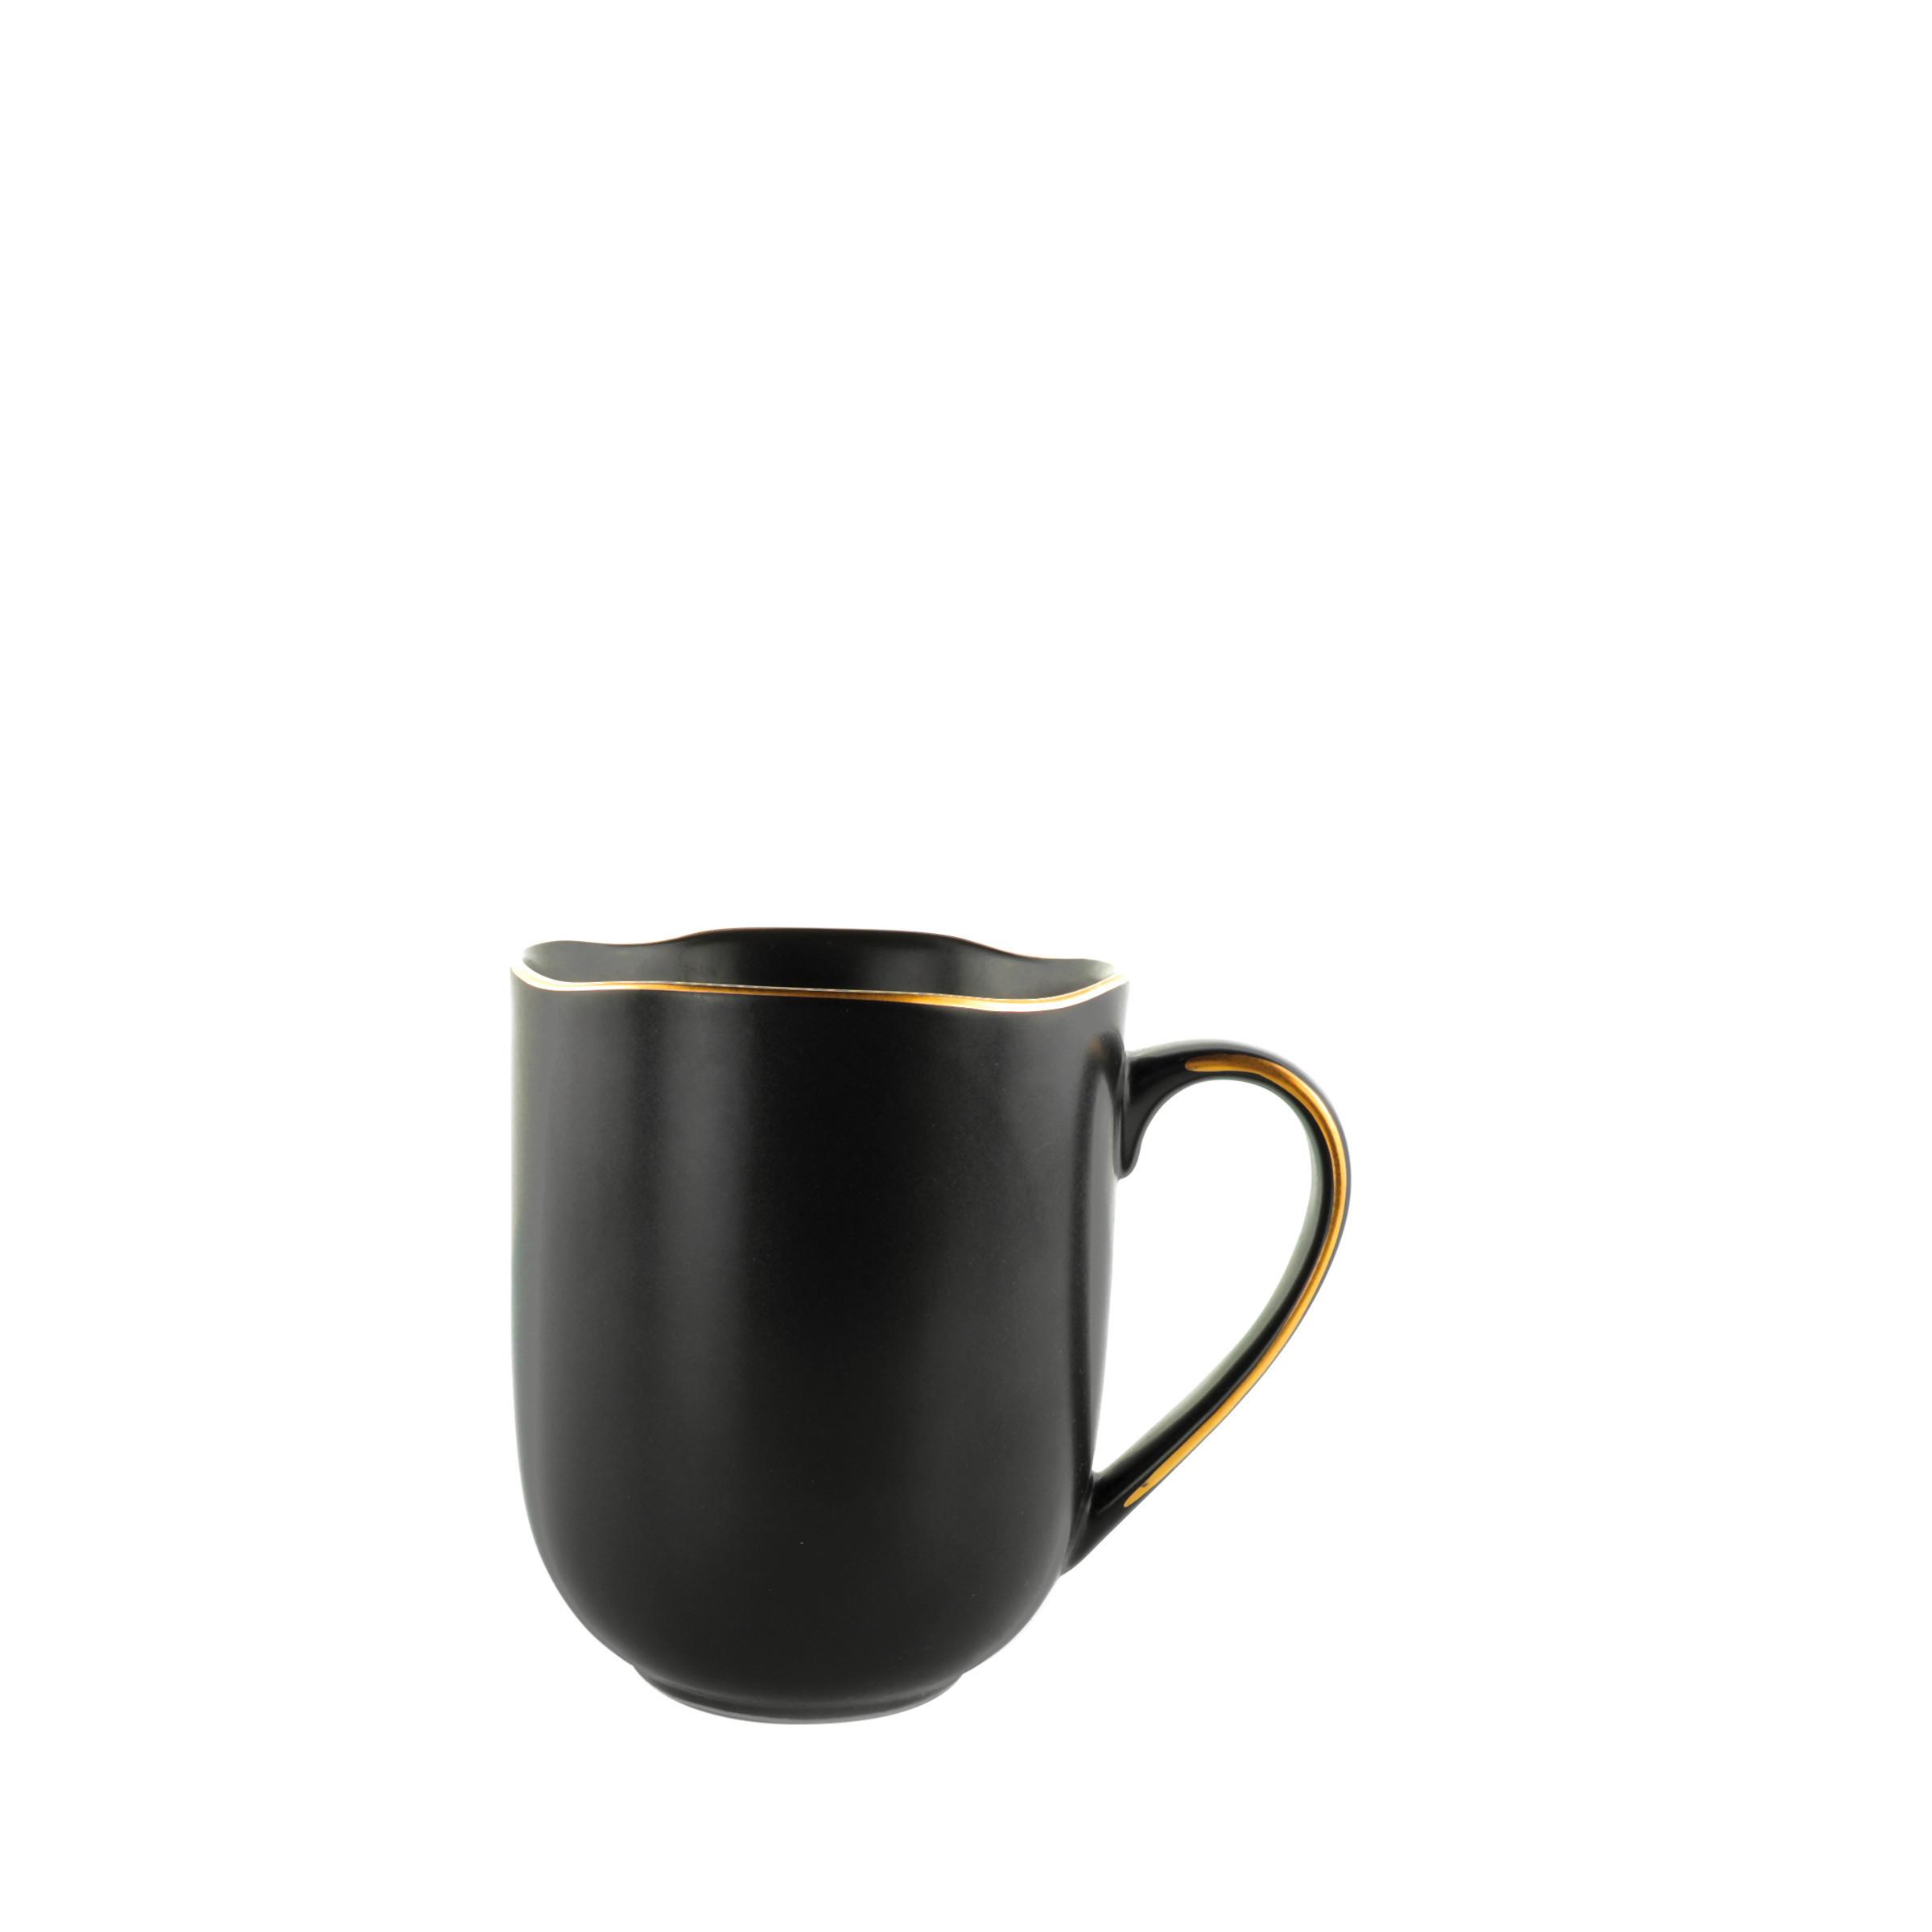 Velika Šalica 350ml. Onix - zlatne boje/crna, Modern, keramika (350ml) - Premium Living